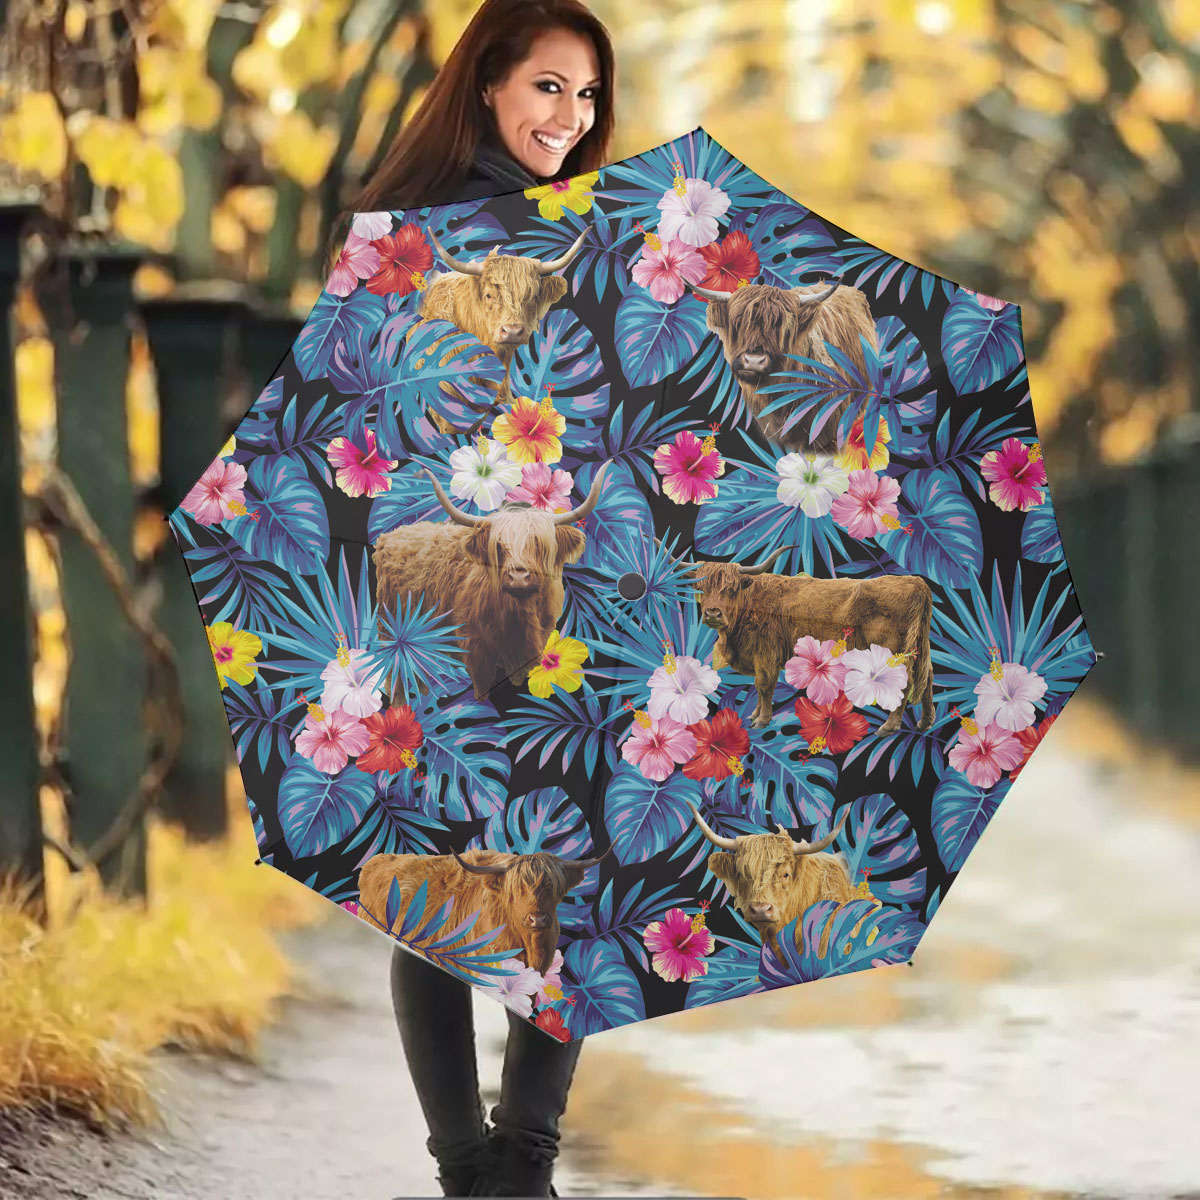 Highland Tropical Flowers Leaves Pattern Umbrella